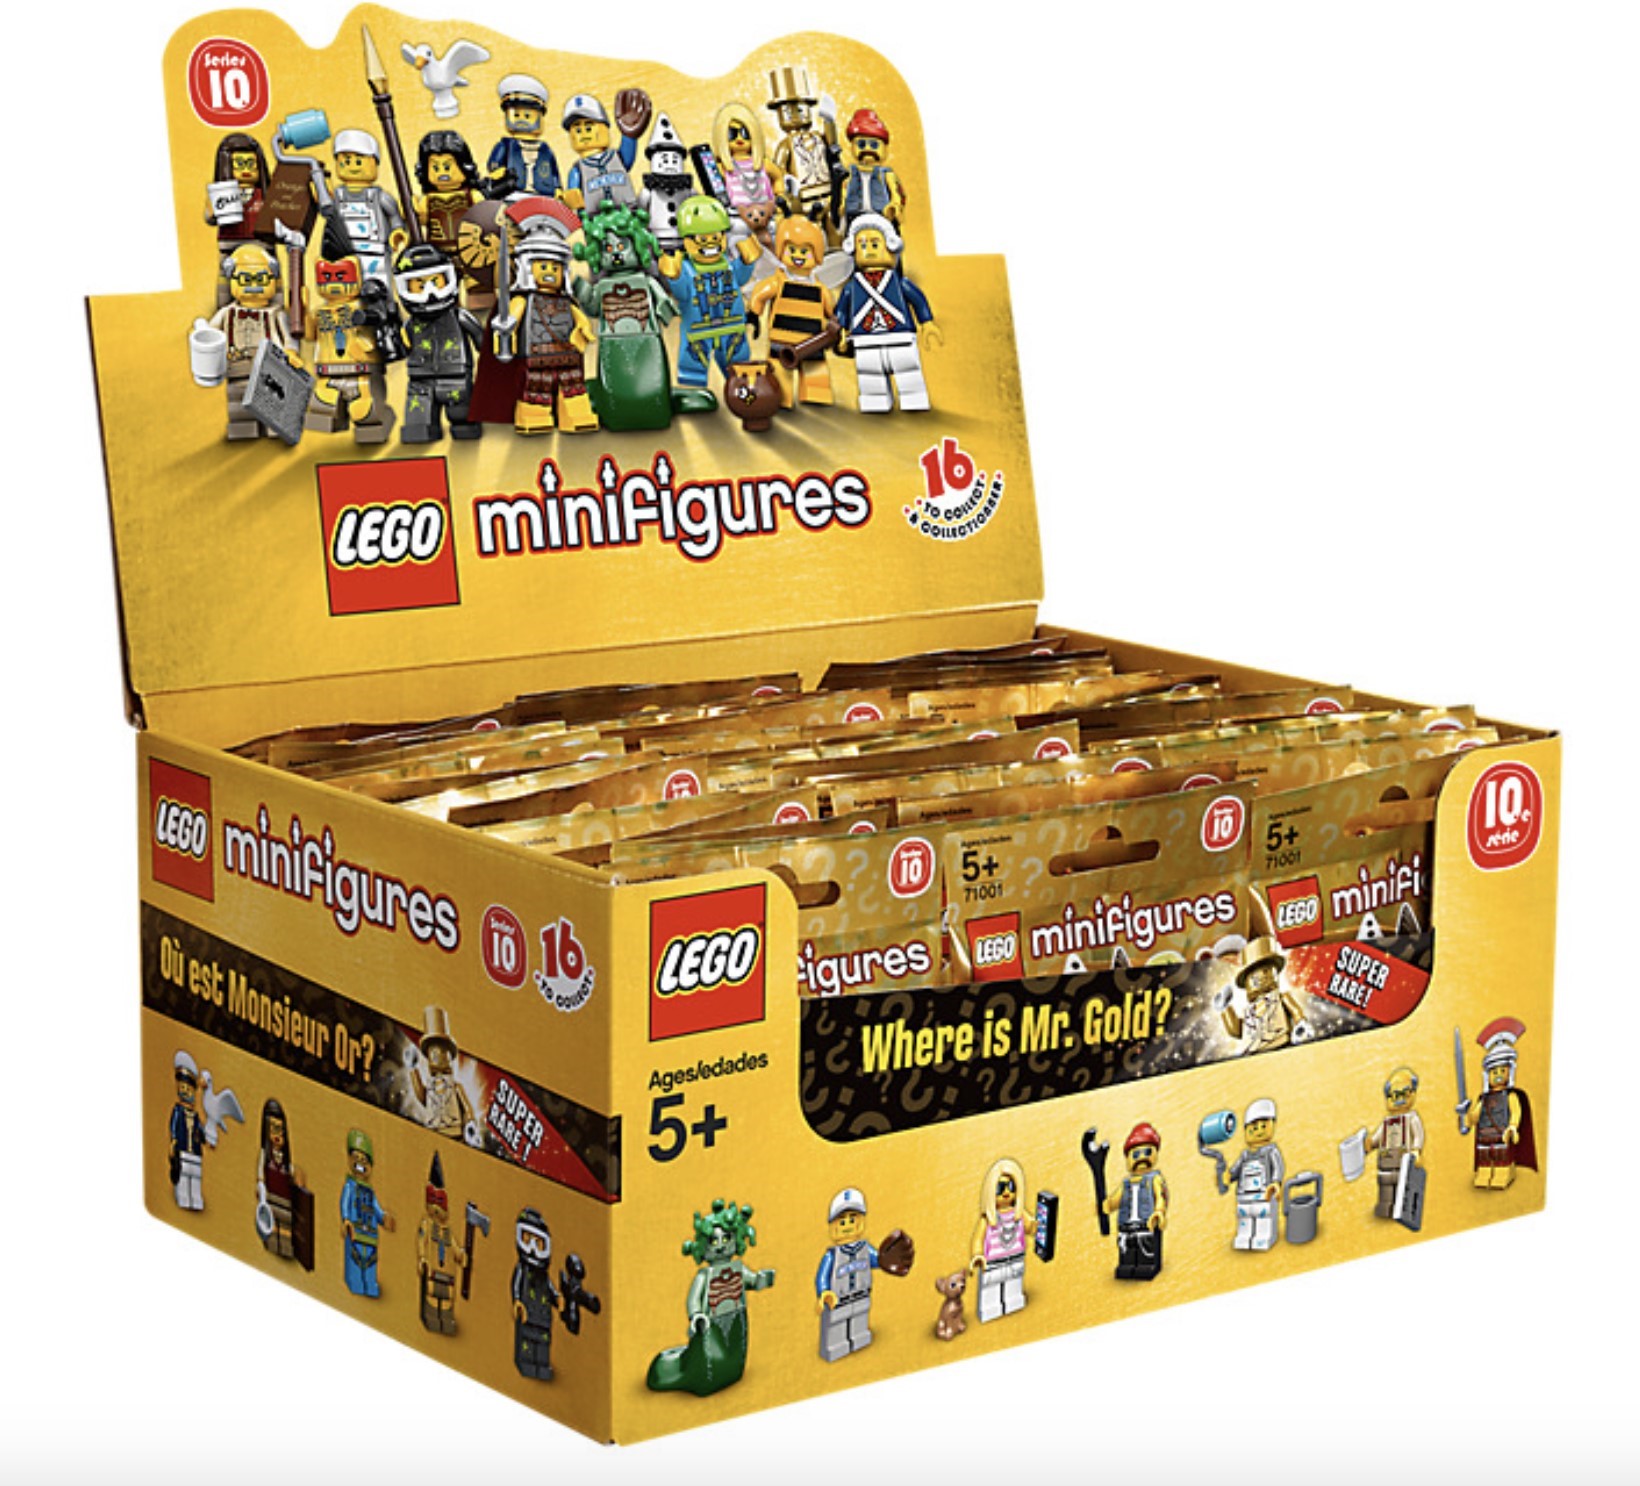 konsulent vej arve LEGO Collectable Minifigures Series 10 | Brickset